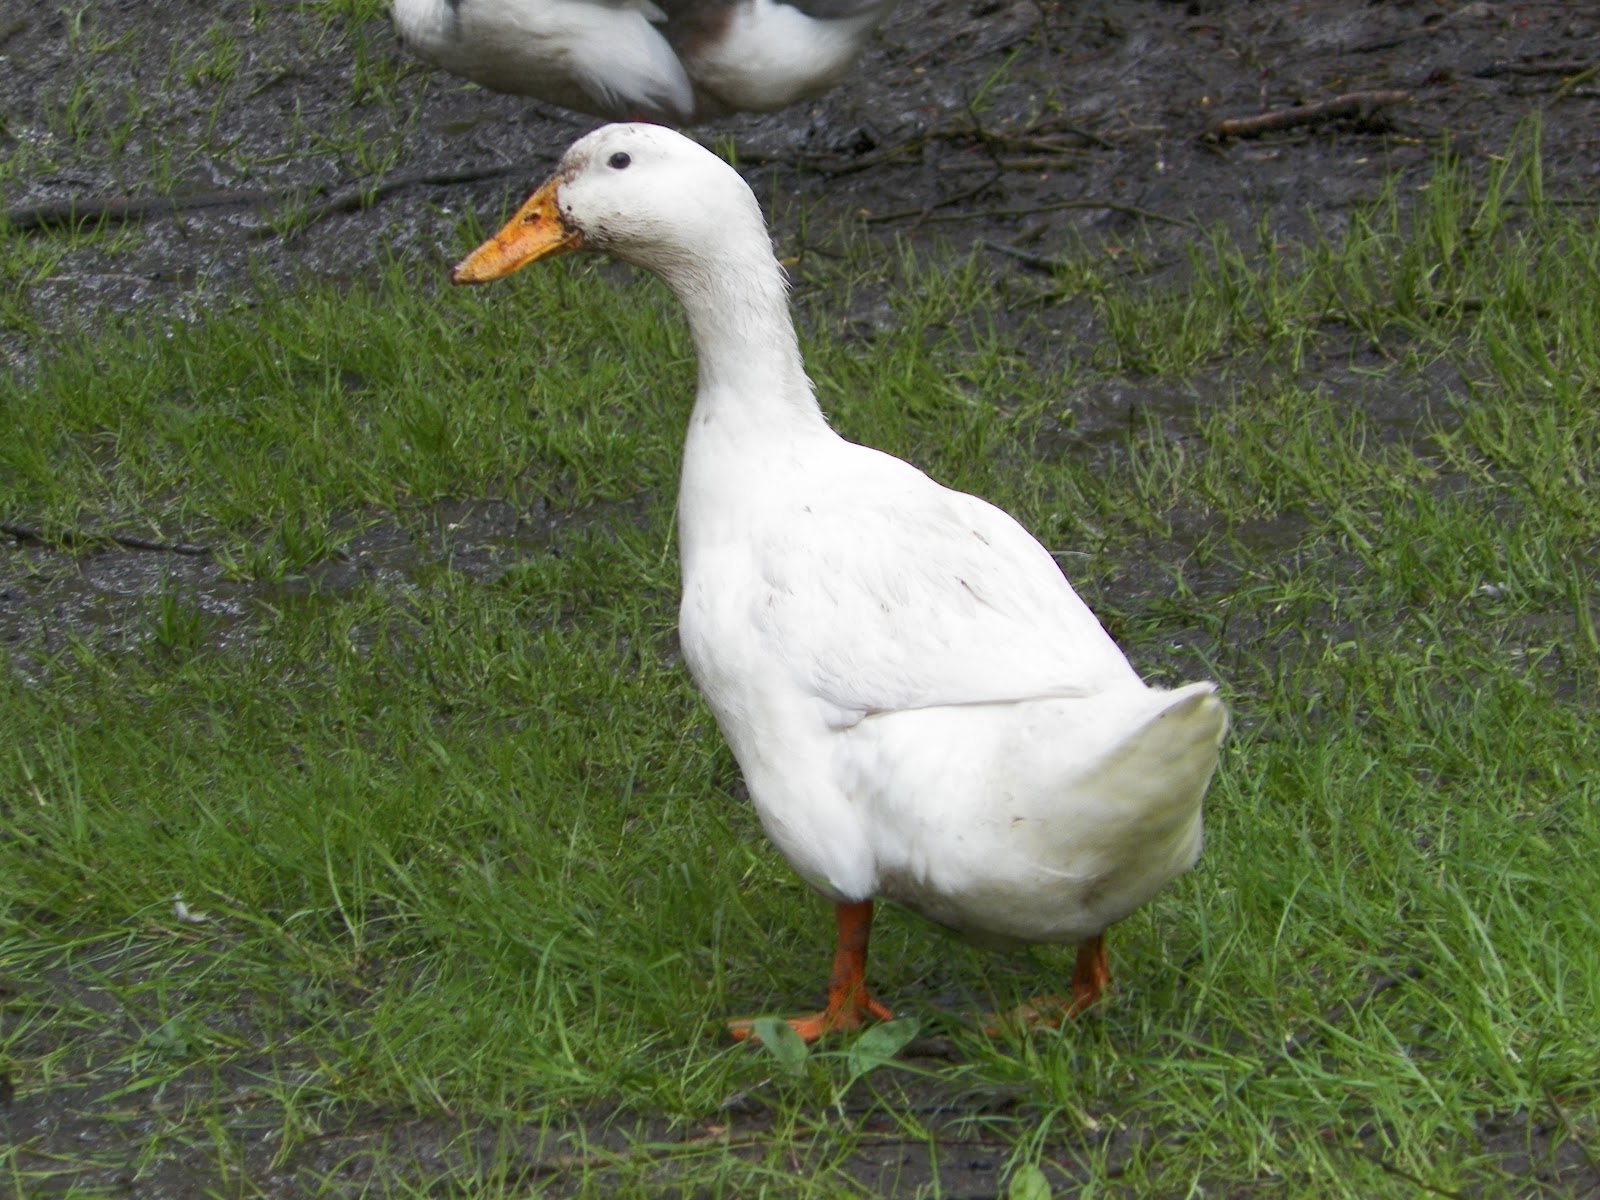 Royal Pekin Ducks Farm: White Pekin Ducks for Sale in Hyderabad-India